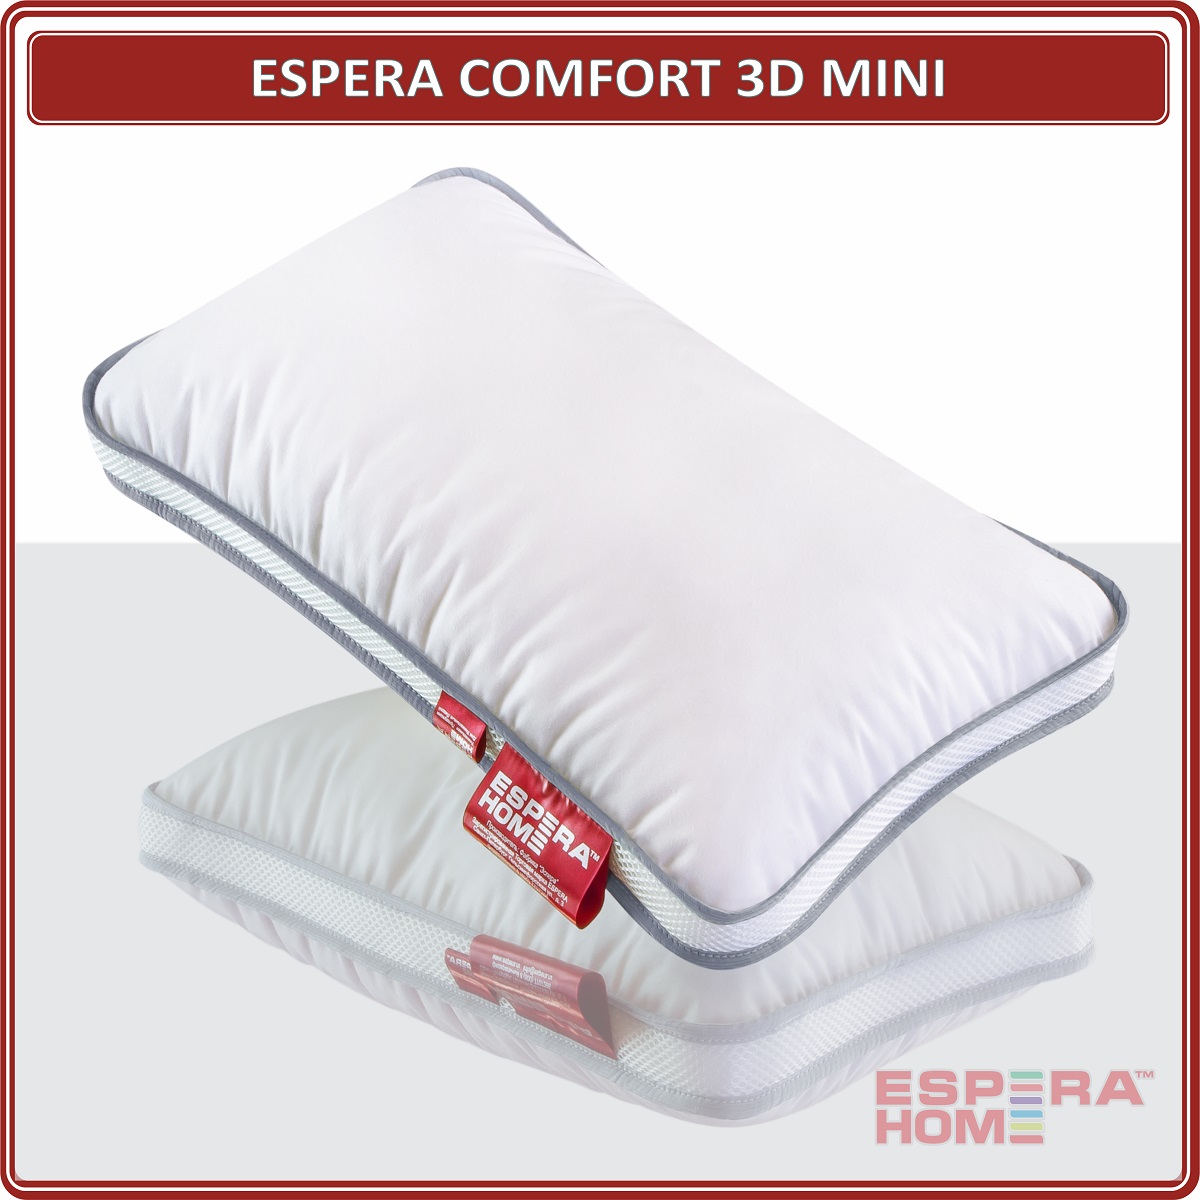 Новинка! Подушка Espera Comfort - 3D MINI со скидкой